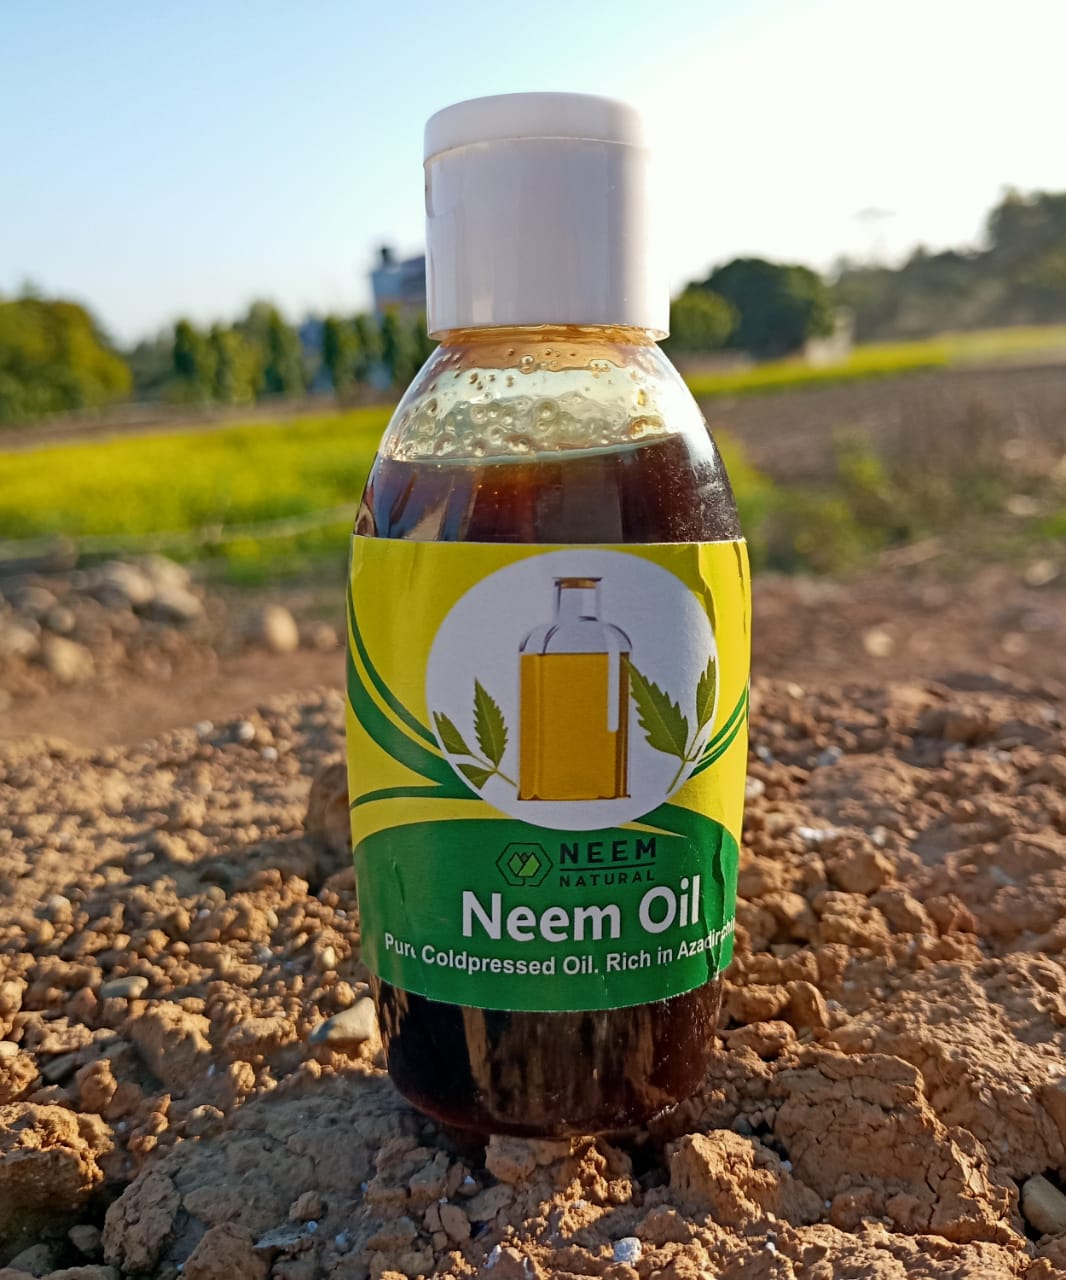 Natural Neem Oil Img1 Mtseedbank 